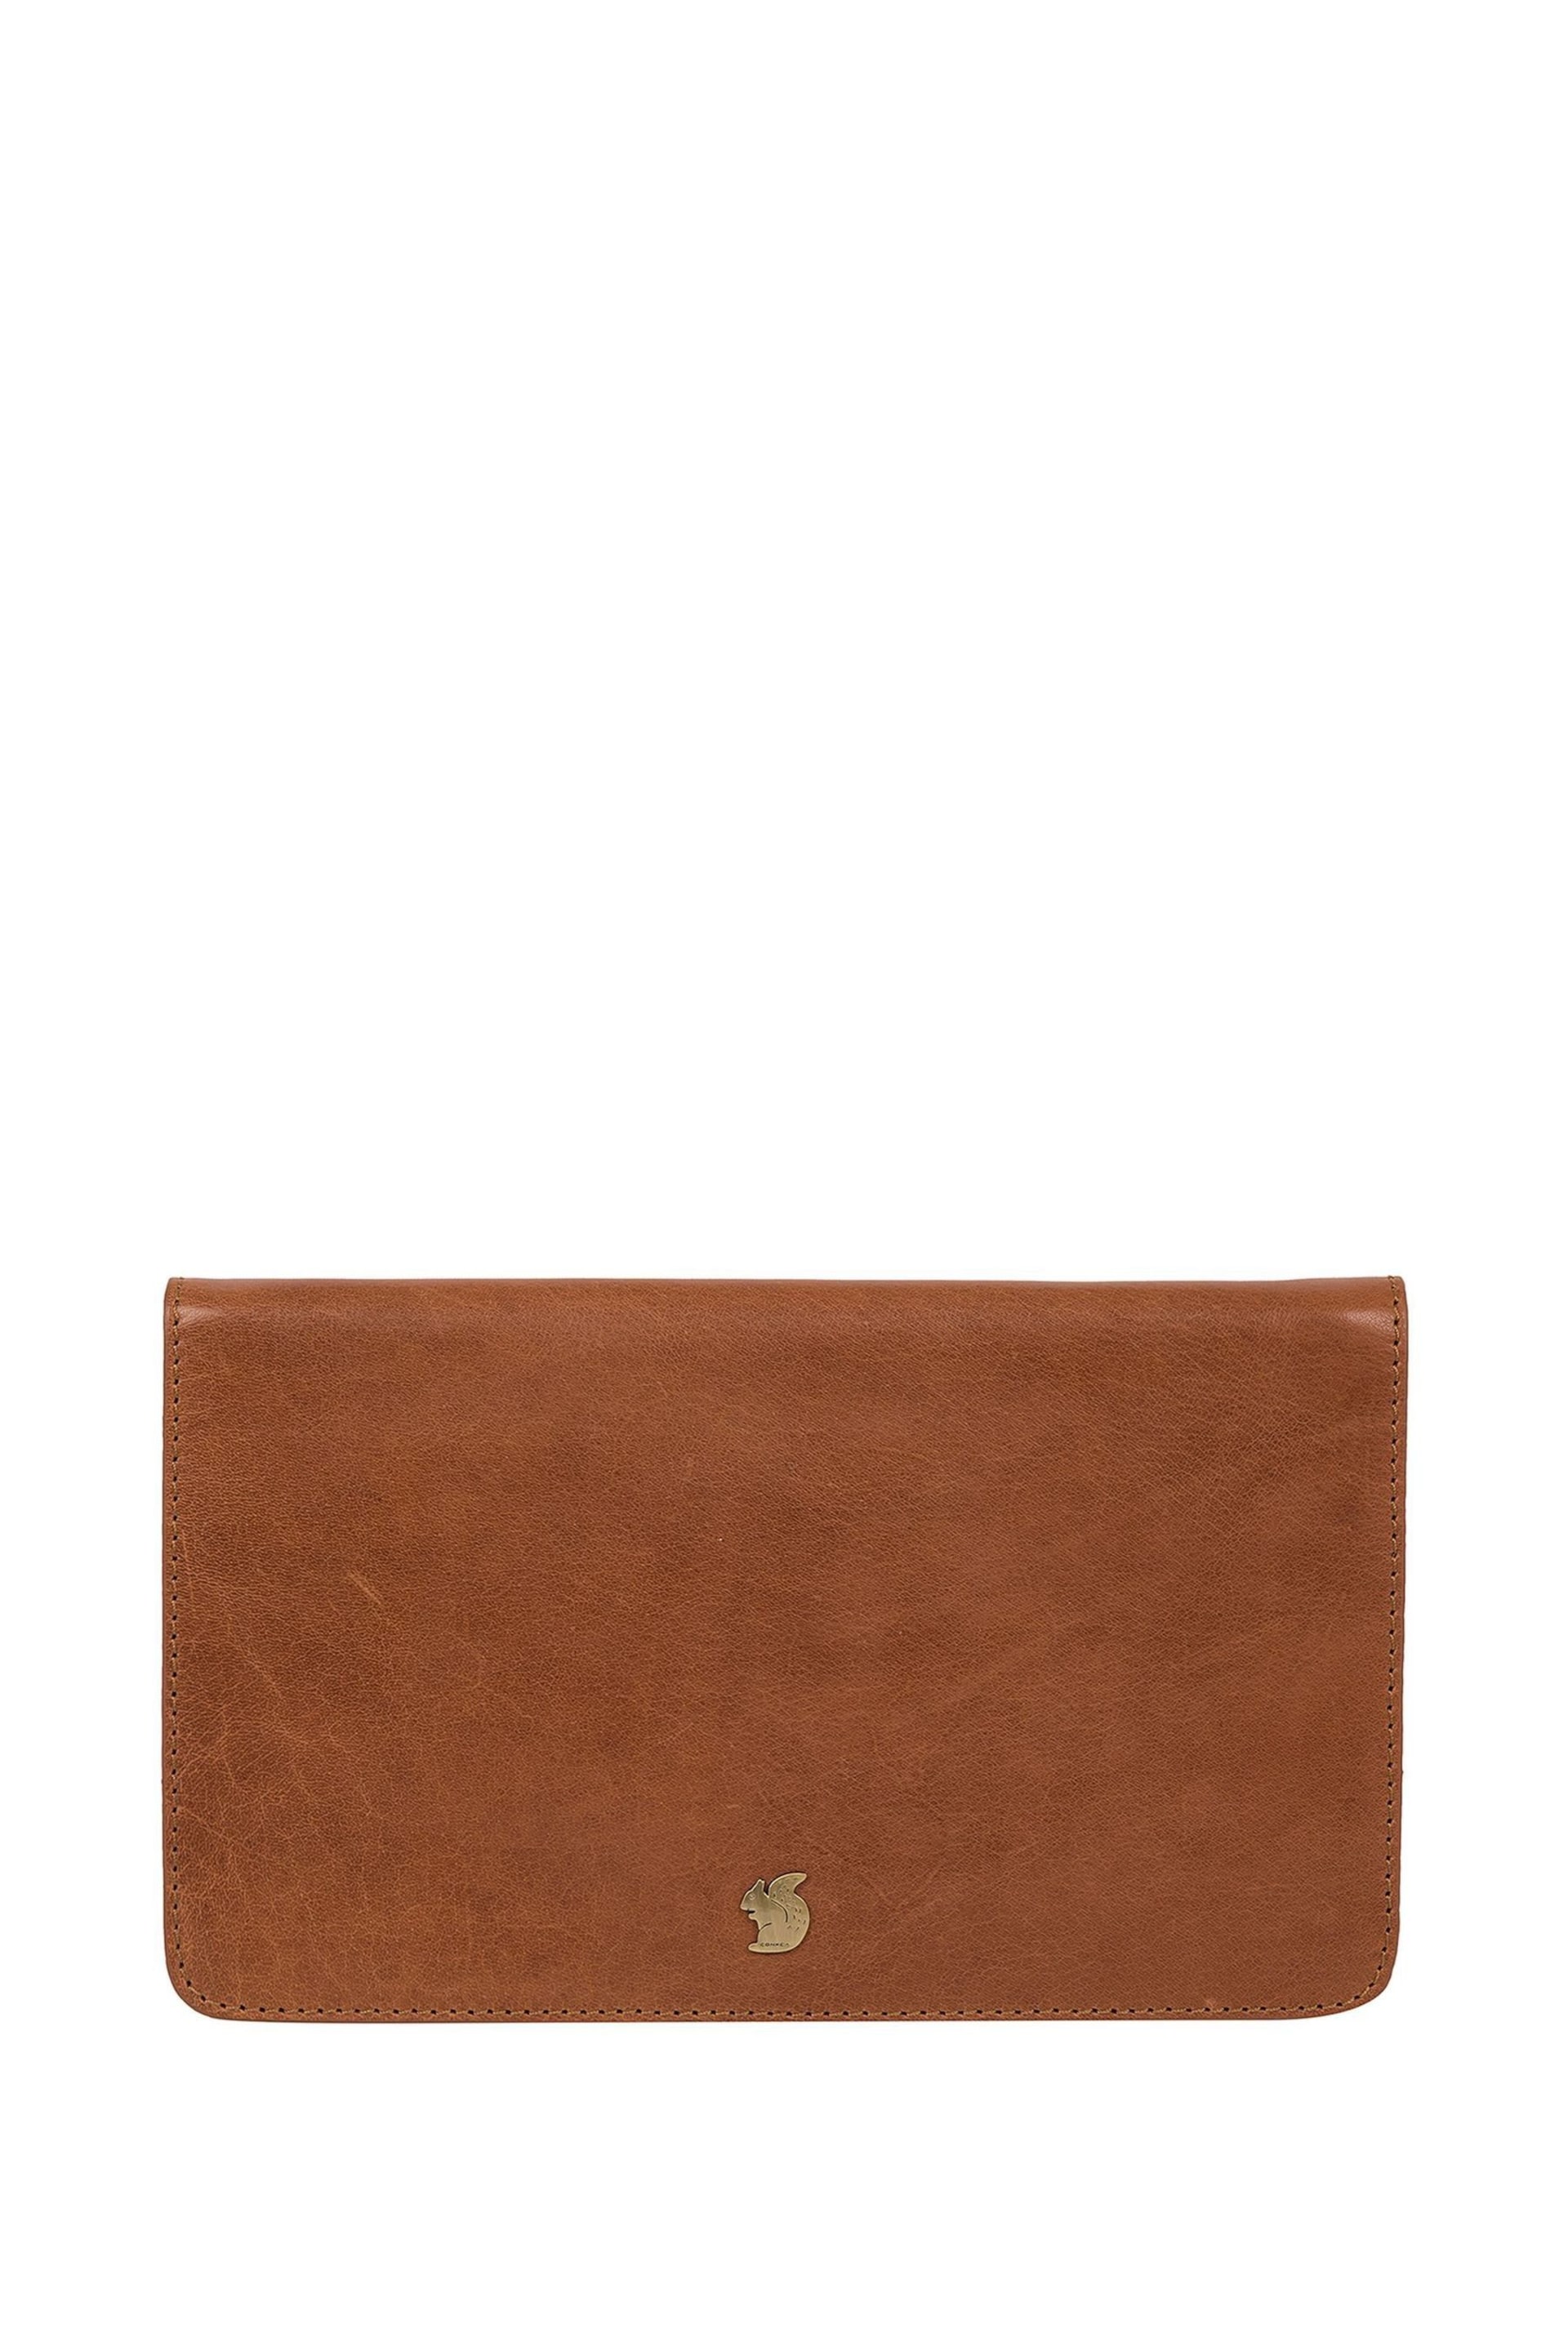 Conkca Cherish Leather Clutch Bag - Image 2 of 5